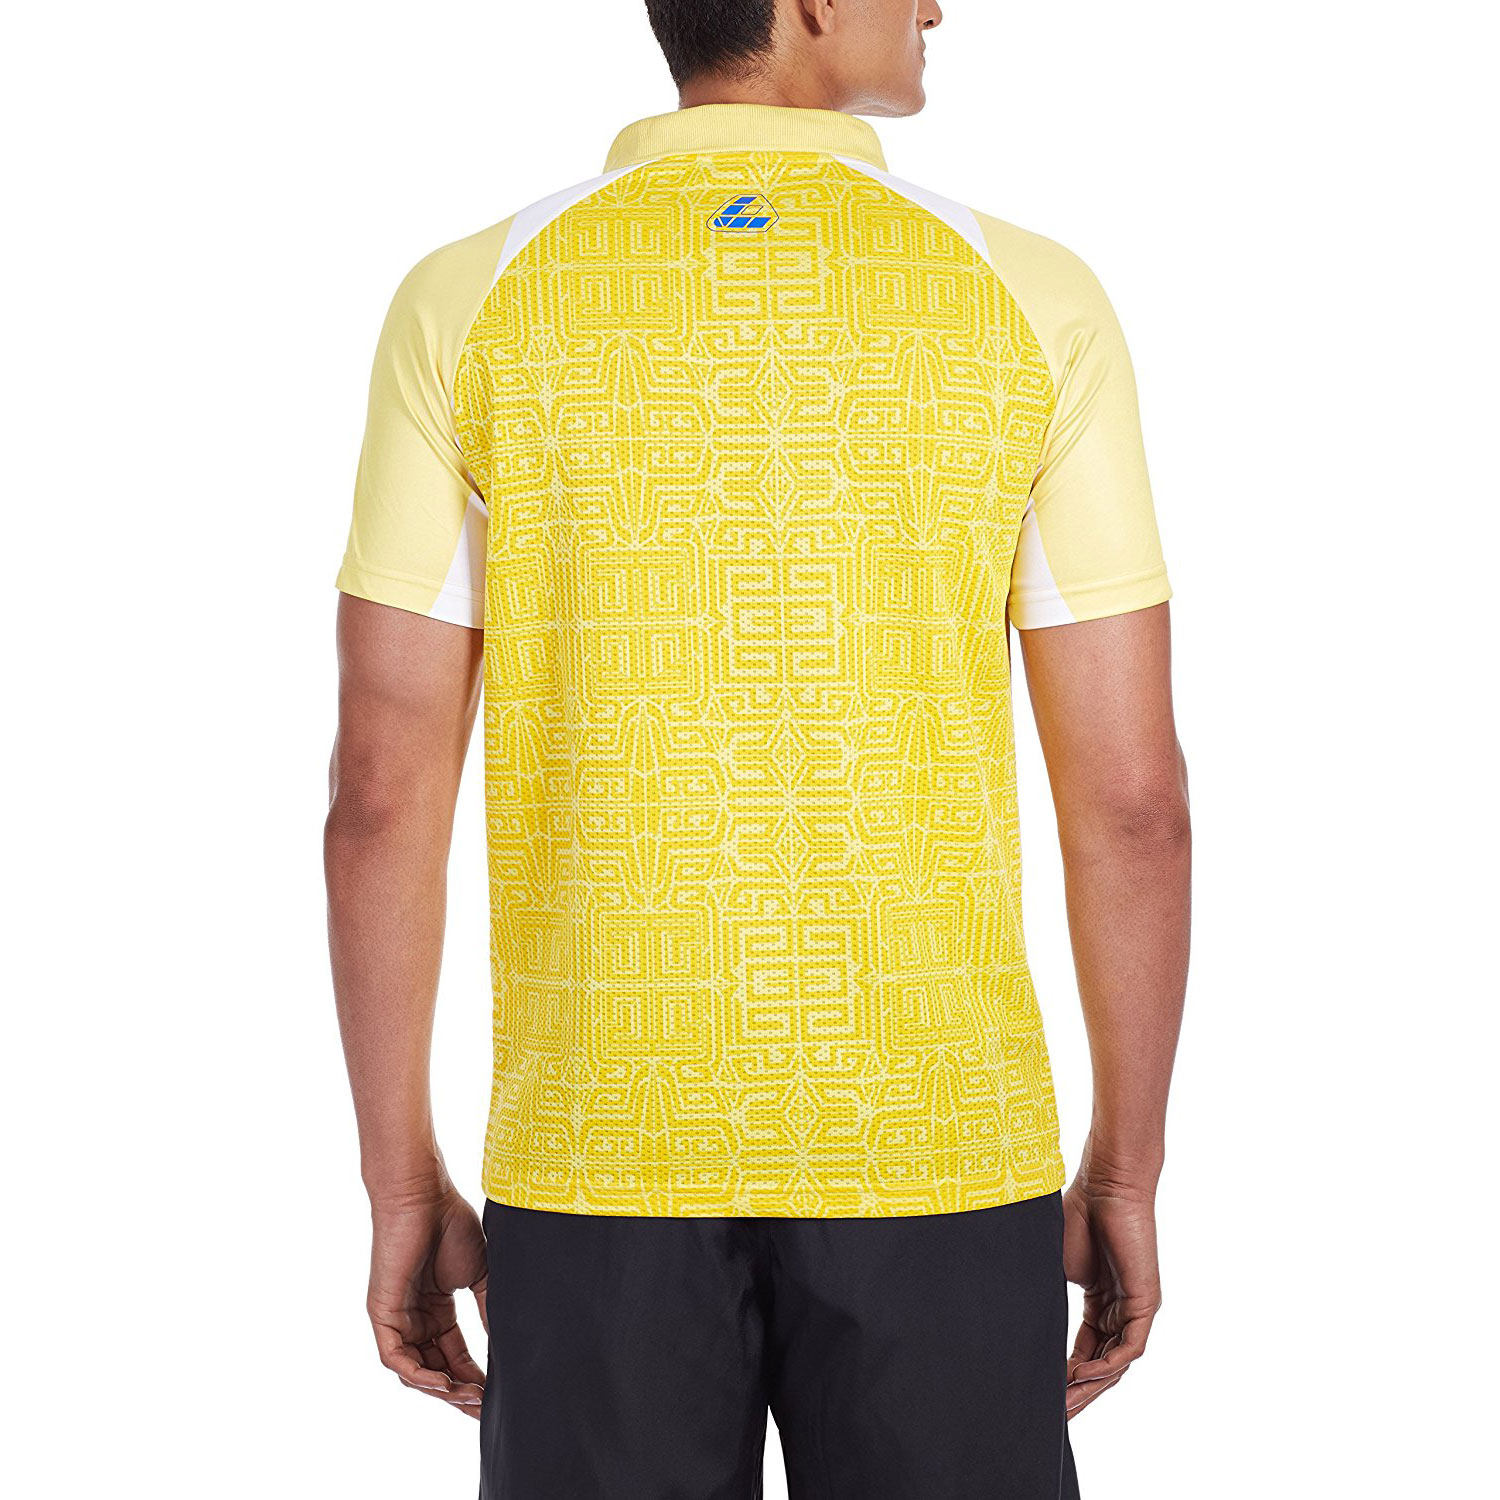  Li-Ning ALPH423-3 Collar Badminton T-Shirt, Men's (Yellow) 